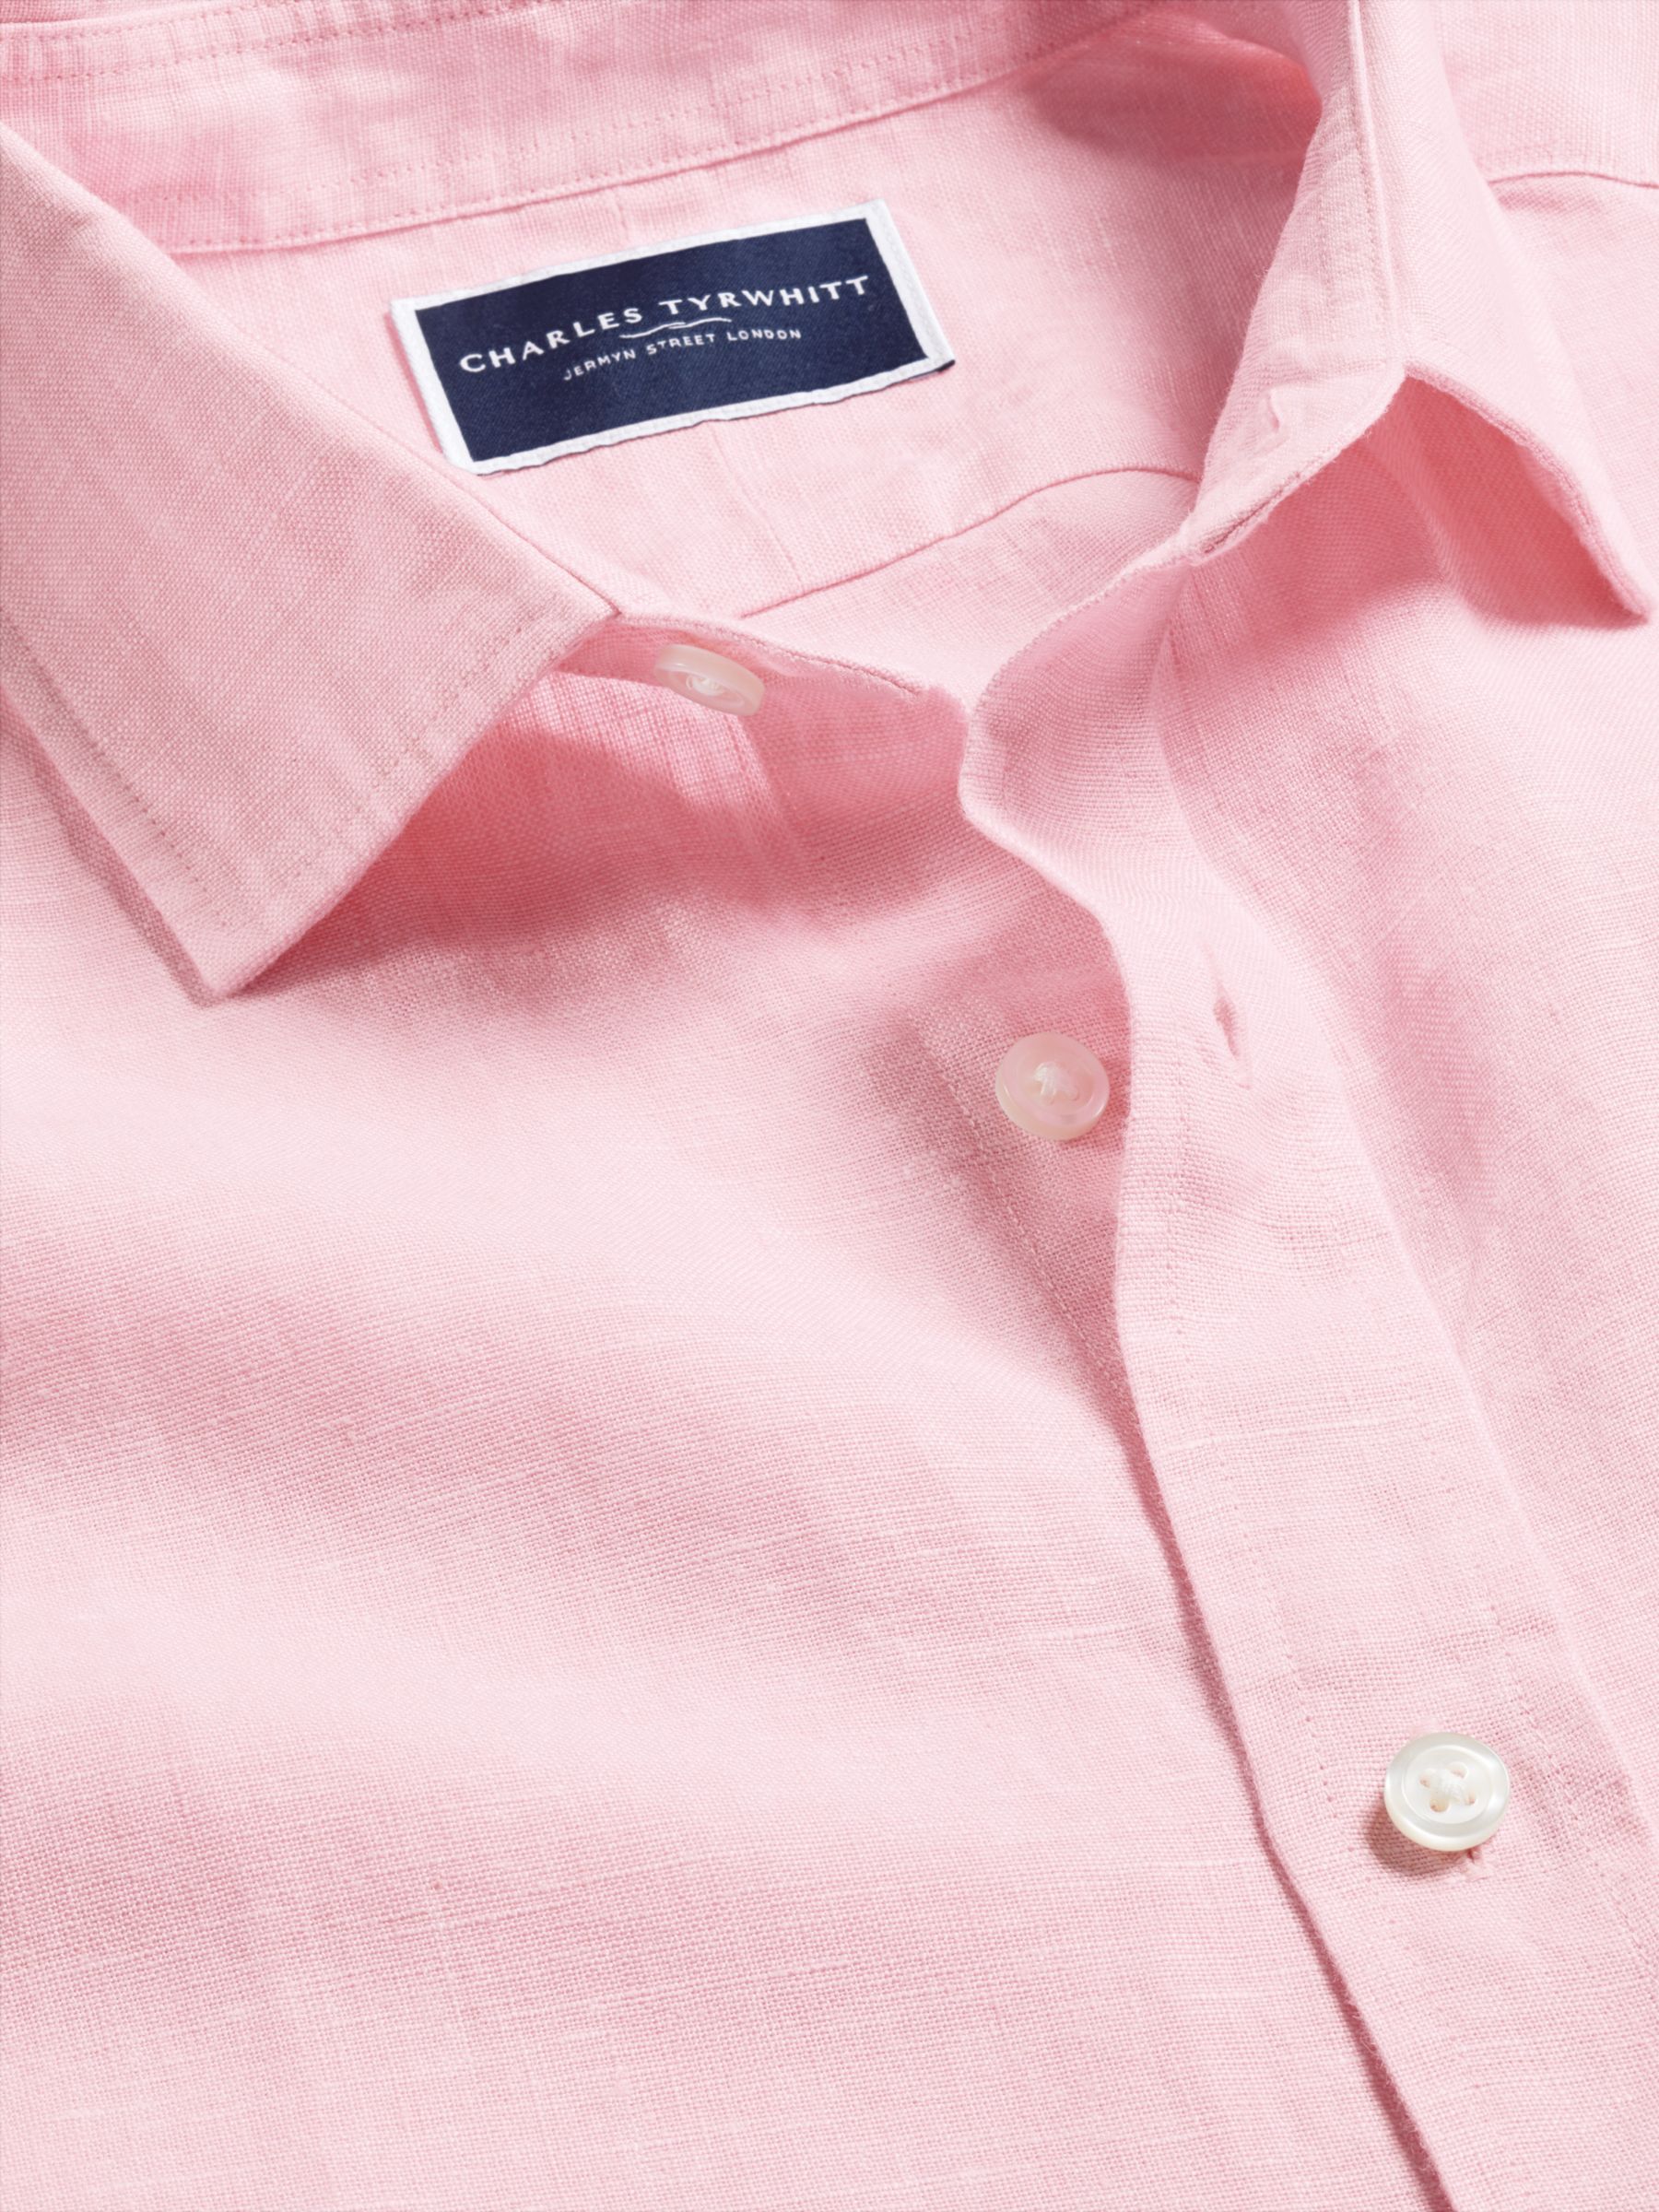 Charles Tyrwhitt Linen Slim Fit Short Sleeve Shirt, Pink, S